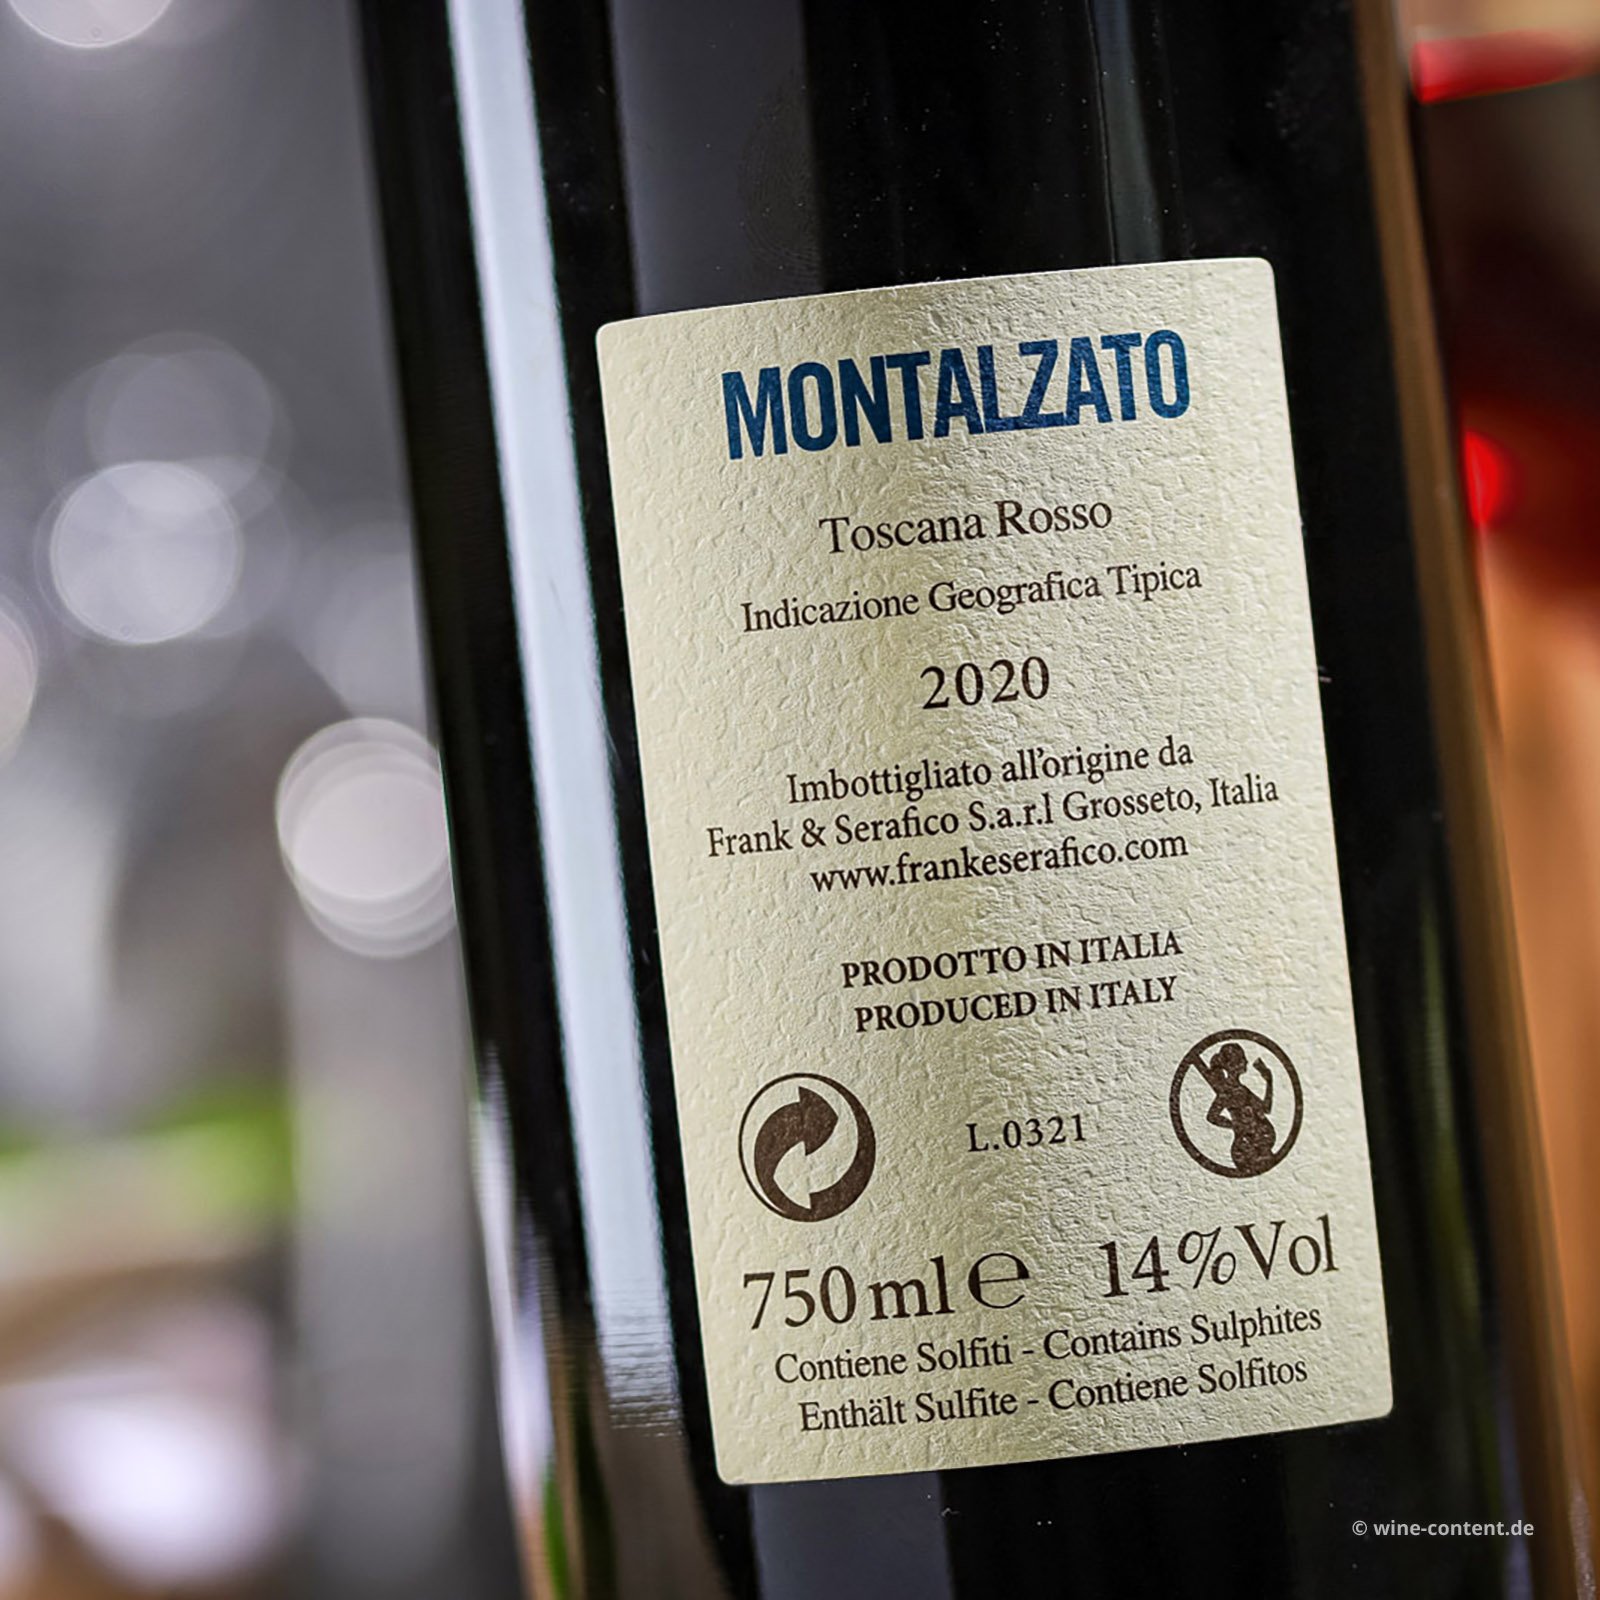 Toscana Rosso 2020 Montalzato